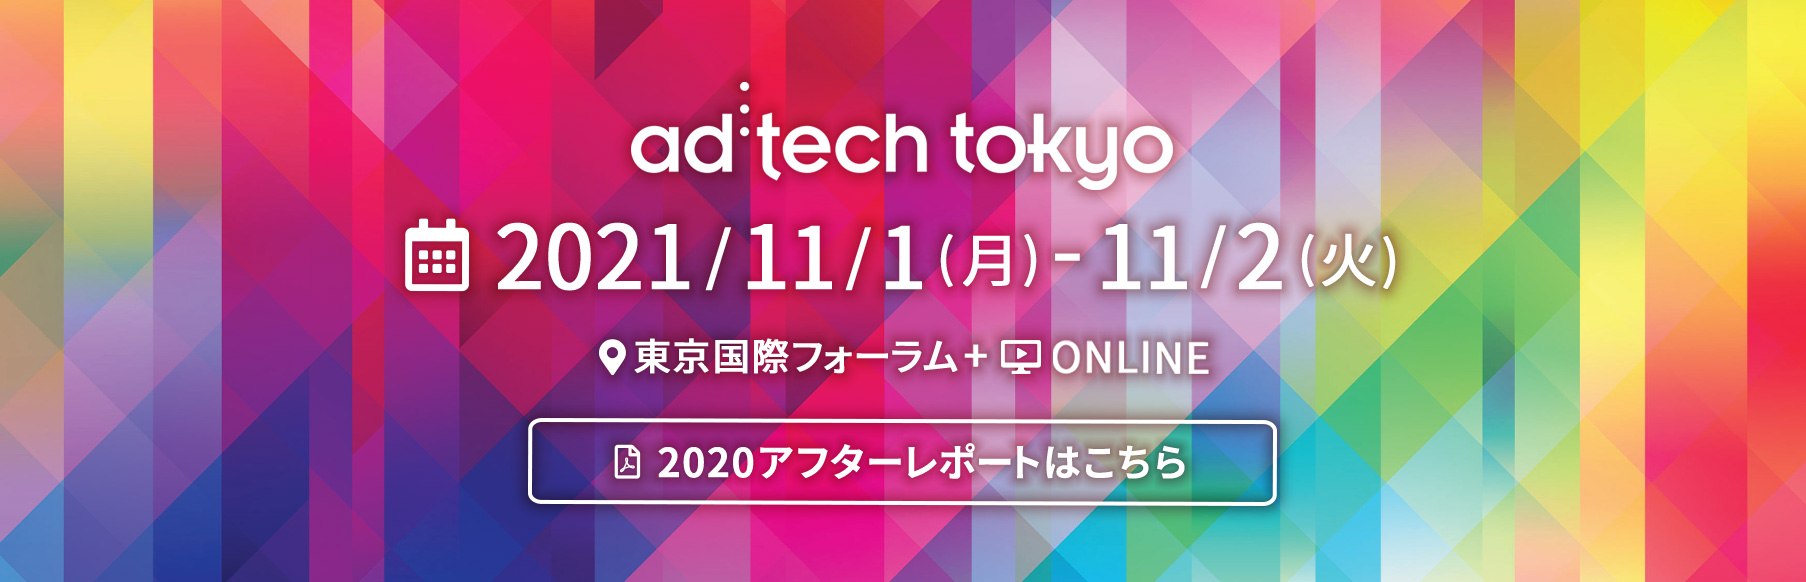 ad:techtokyo 2021年11月1日(月)-11月2日(火) 会場:東京国際フォーラム+ONLINE 2020アフターレポートはこちら